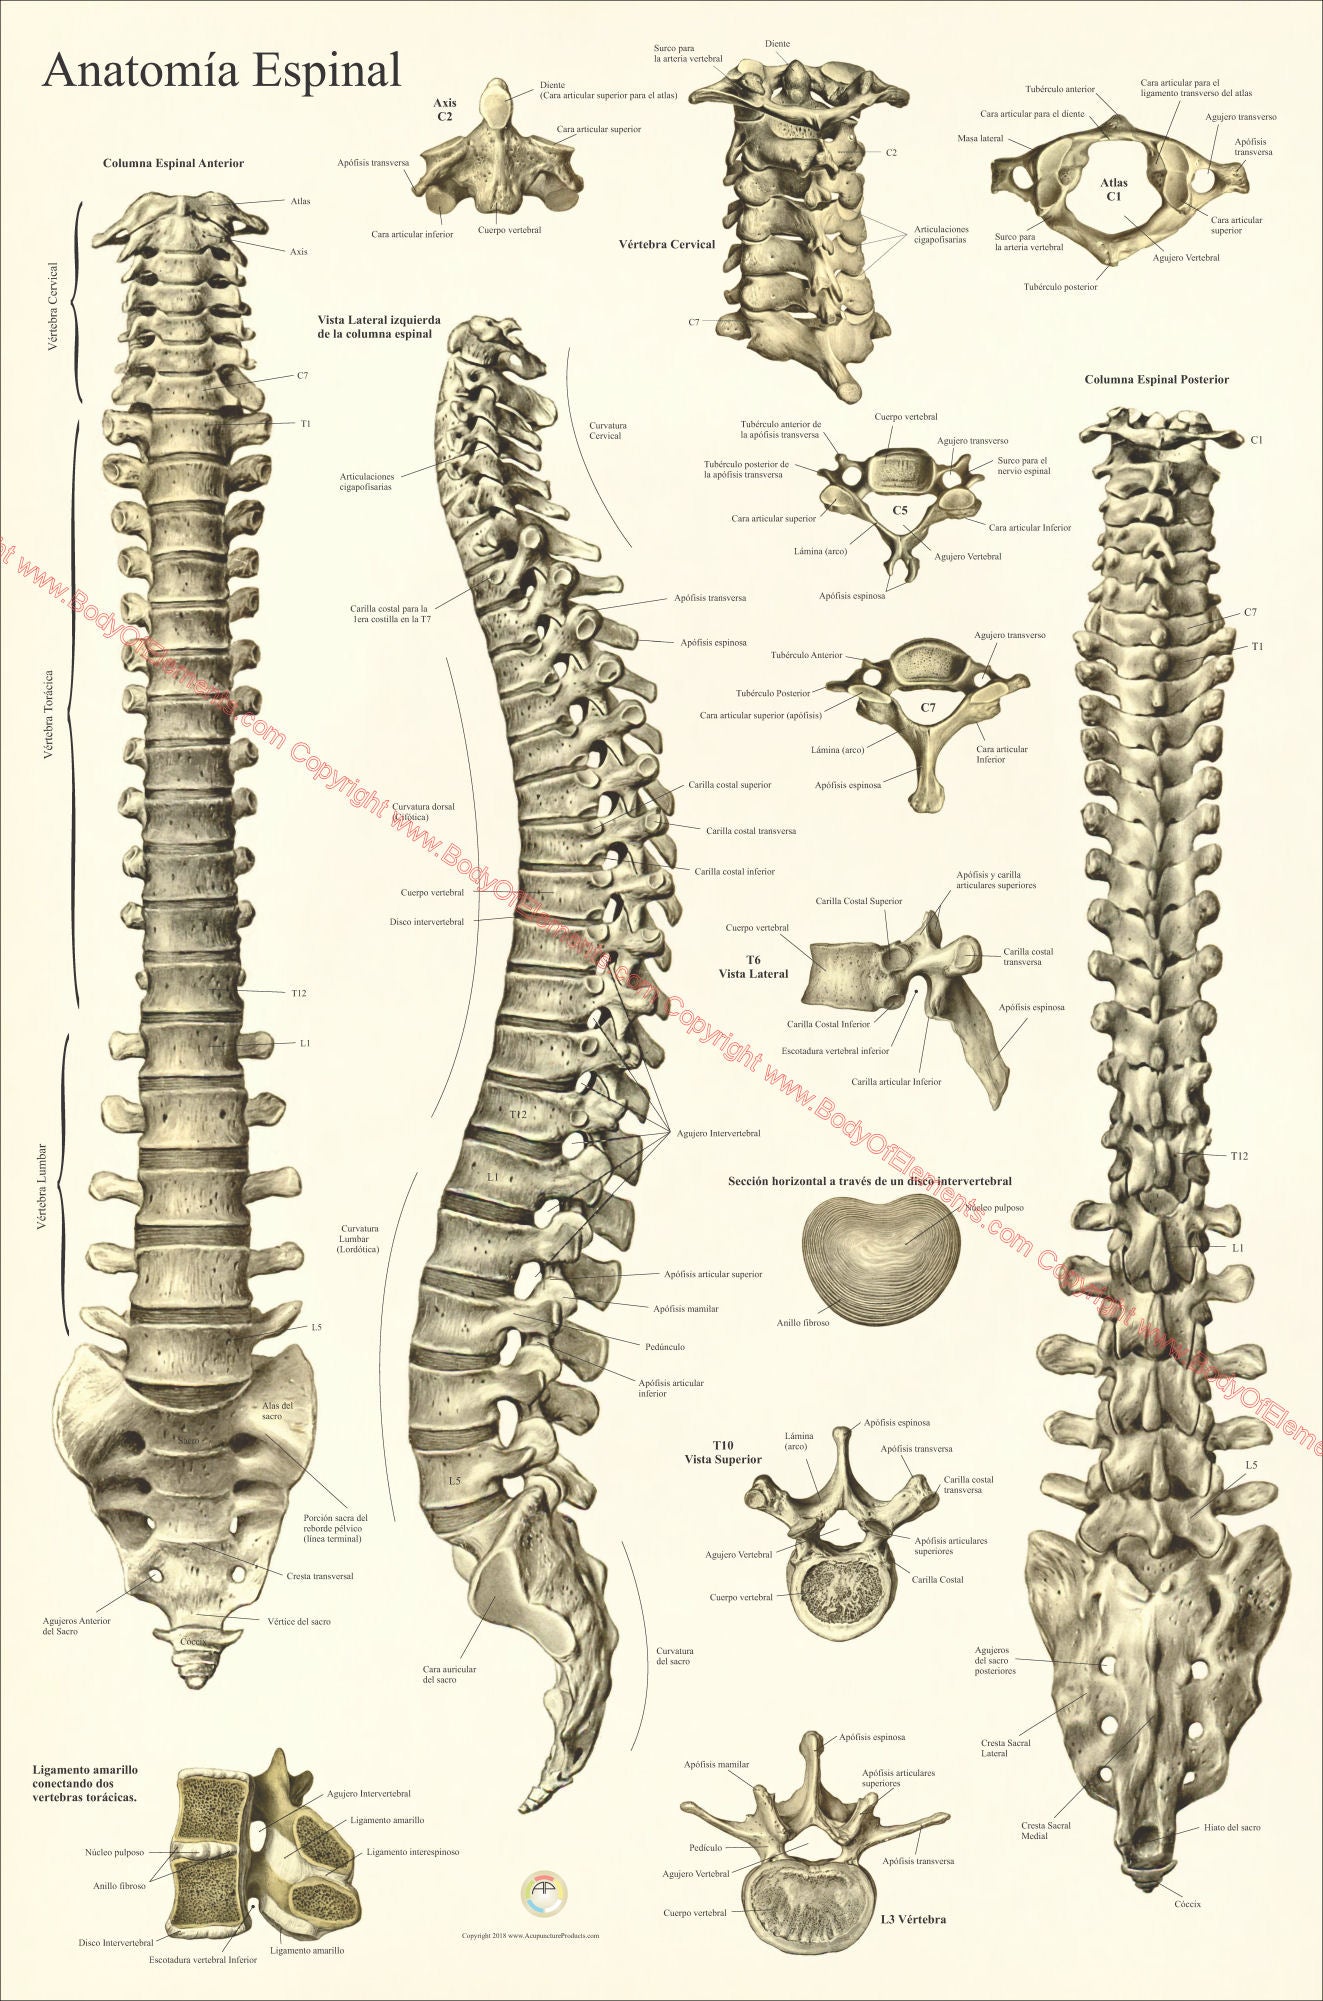 Image 14293_im02: Anatomy of the Spine Illustration